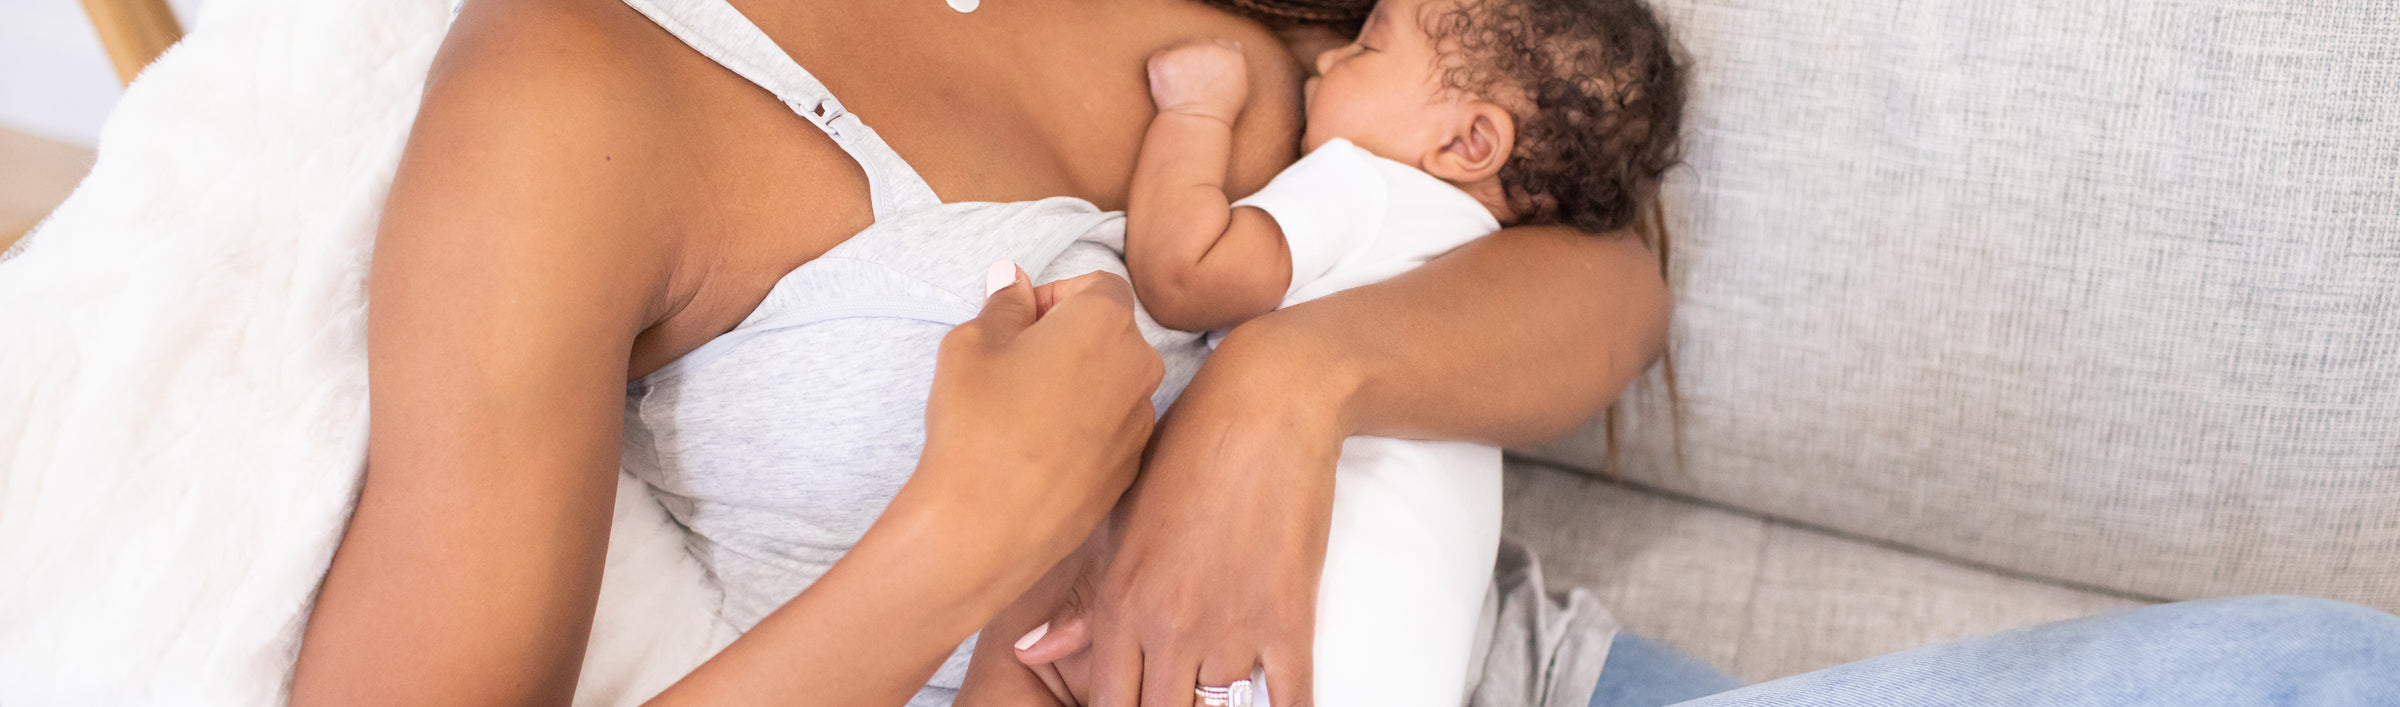 Nursing Tank Tops for Breastfeeding - Pregnancy Must Haves